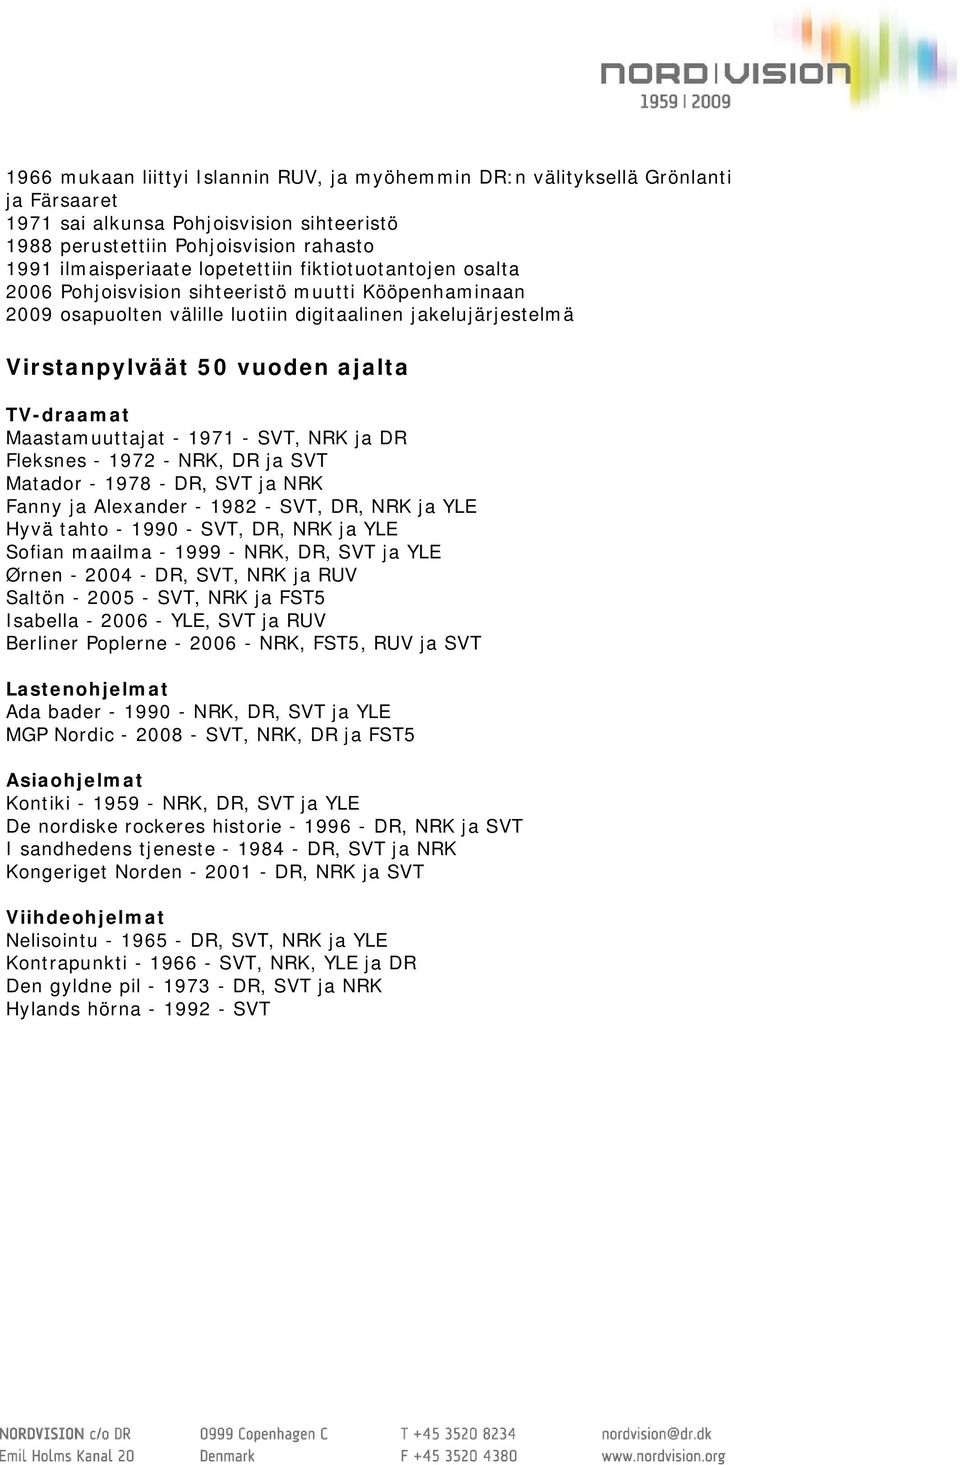 Maastamuuttajat - 1971 - SVT, NRK ja DR Fleksnes - 1972 - NRK, DR ja SVT Matador - 1978 - DR, SVT ja NRK Fanny ja Alexander - 1982 - SVT, DR, NRK ja YLE Hyvä tahto - 1990 - SVT, DR, NRK ja YLE Sofian